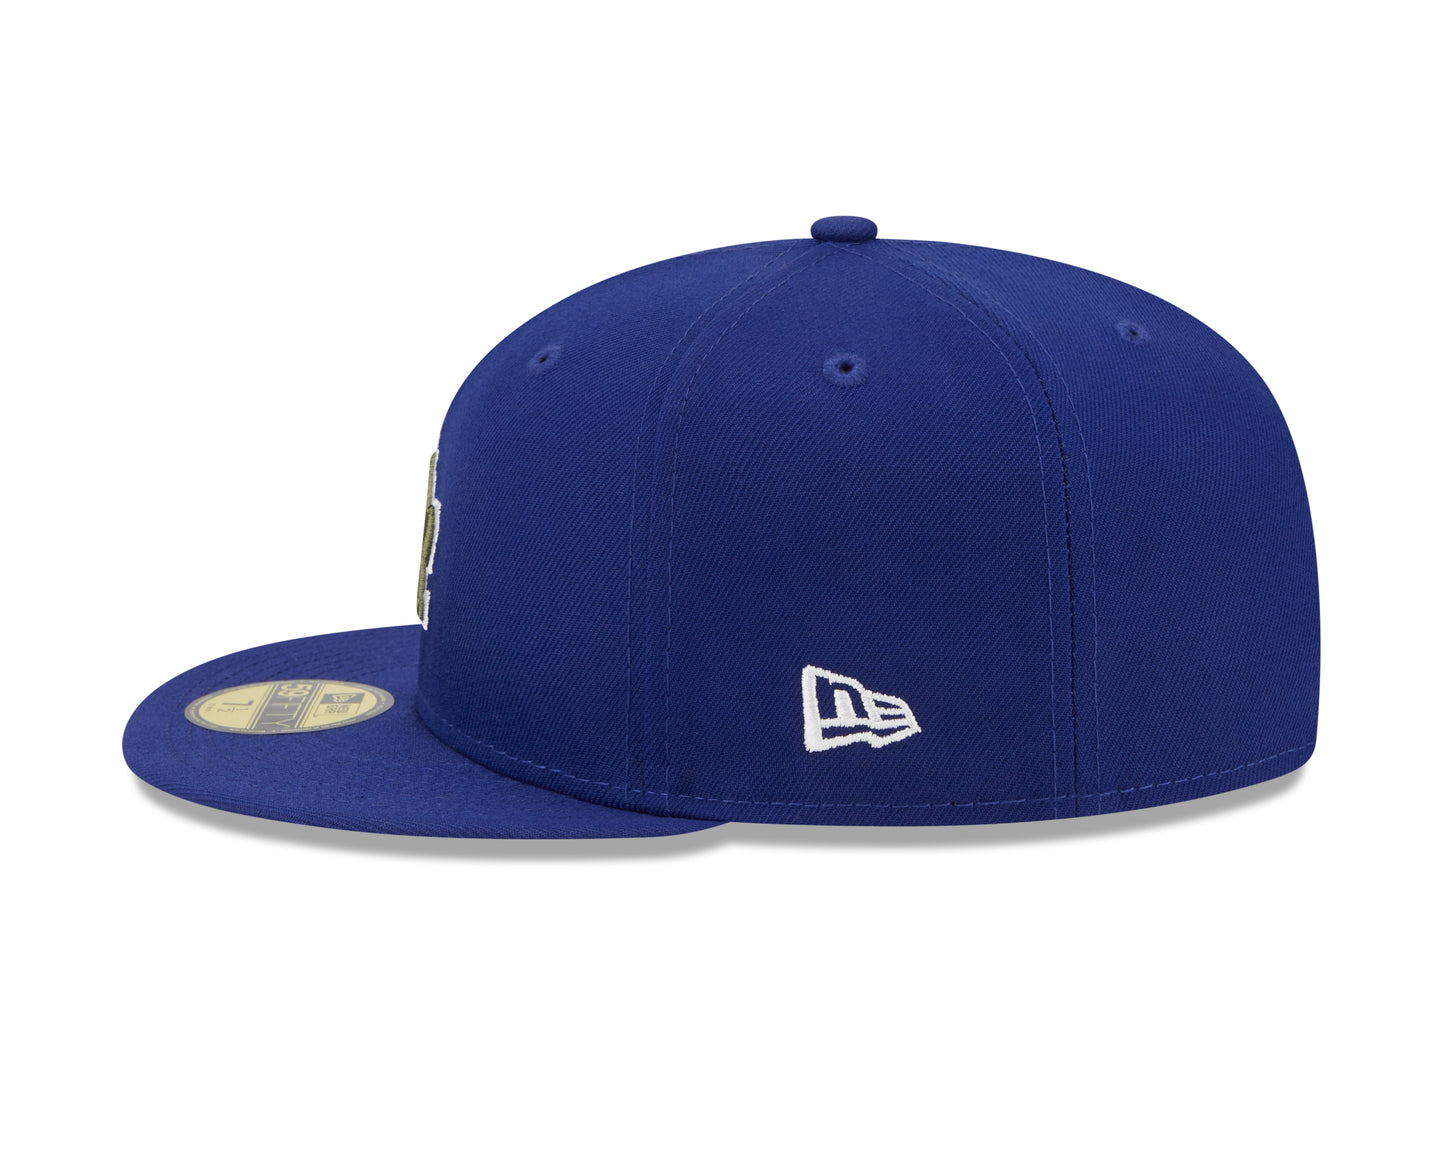 New Era - 5950 Fitted BOTANICAL - Los Angeles Dodgers - Blue - Headz Up 